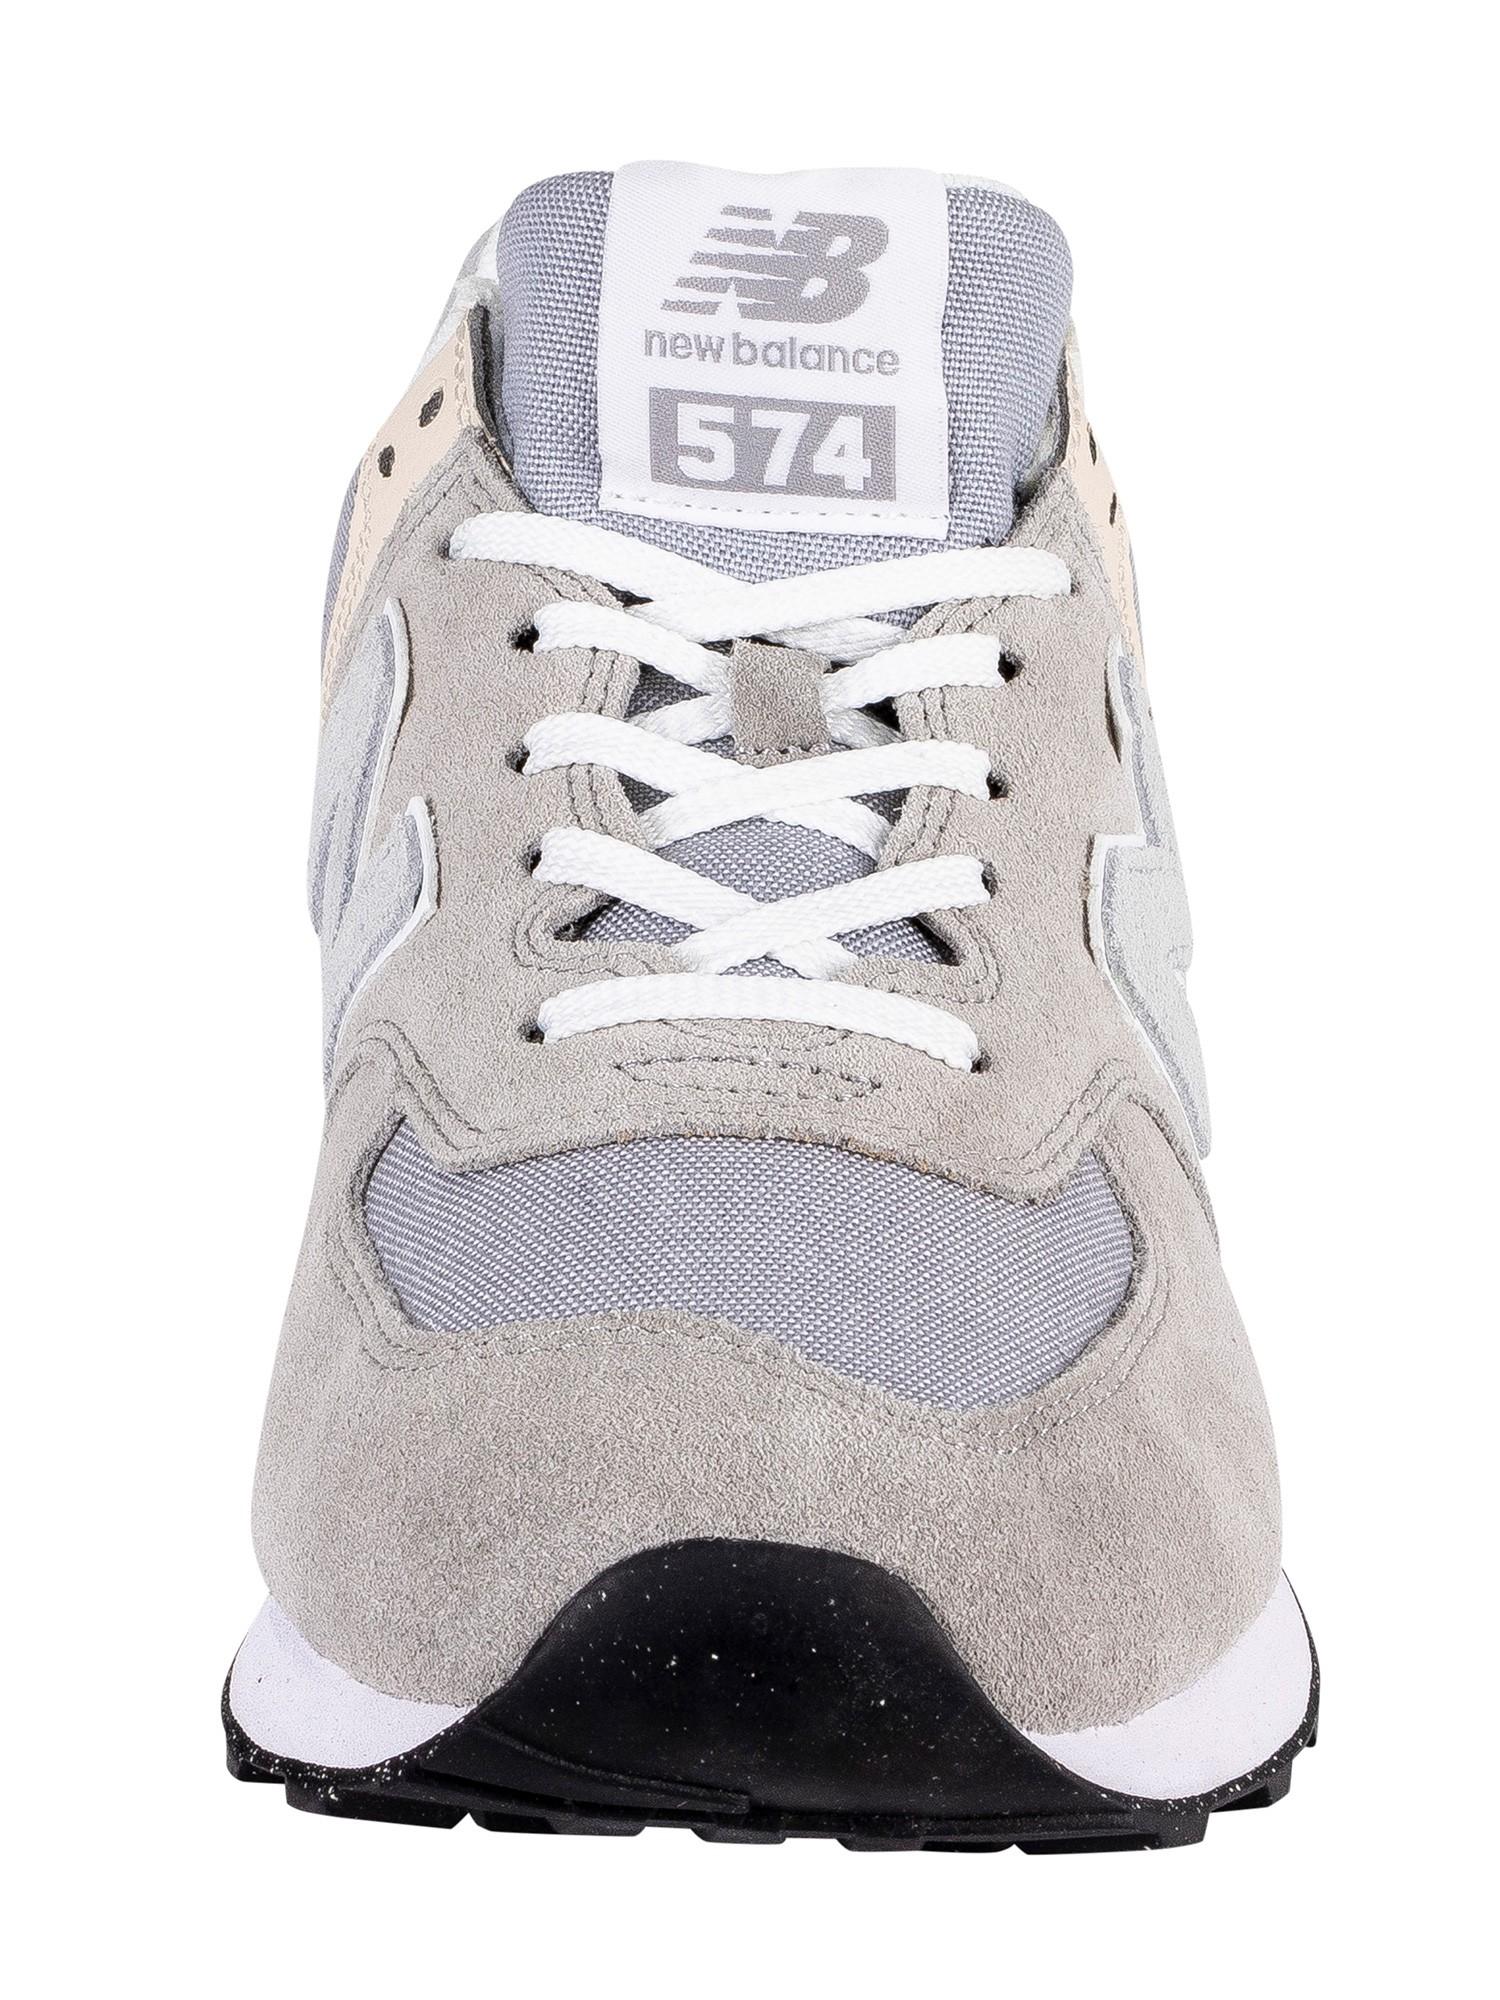 New Balance Rubber 574 V2 Restore Sneaker in Gray for Men - Save 18% | Lyst